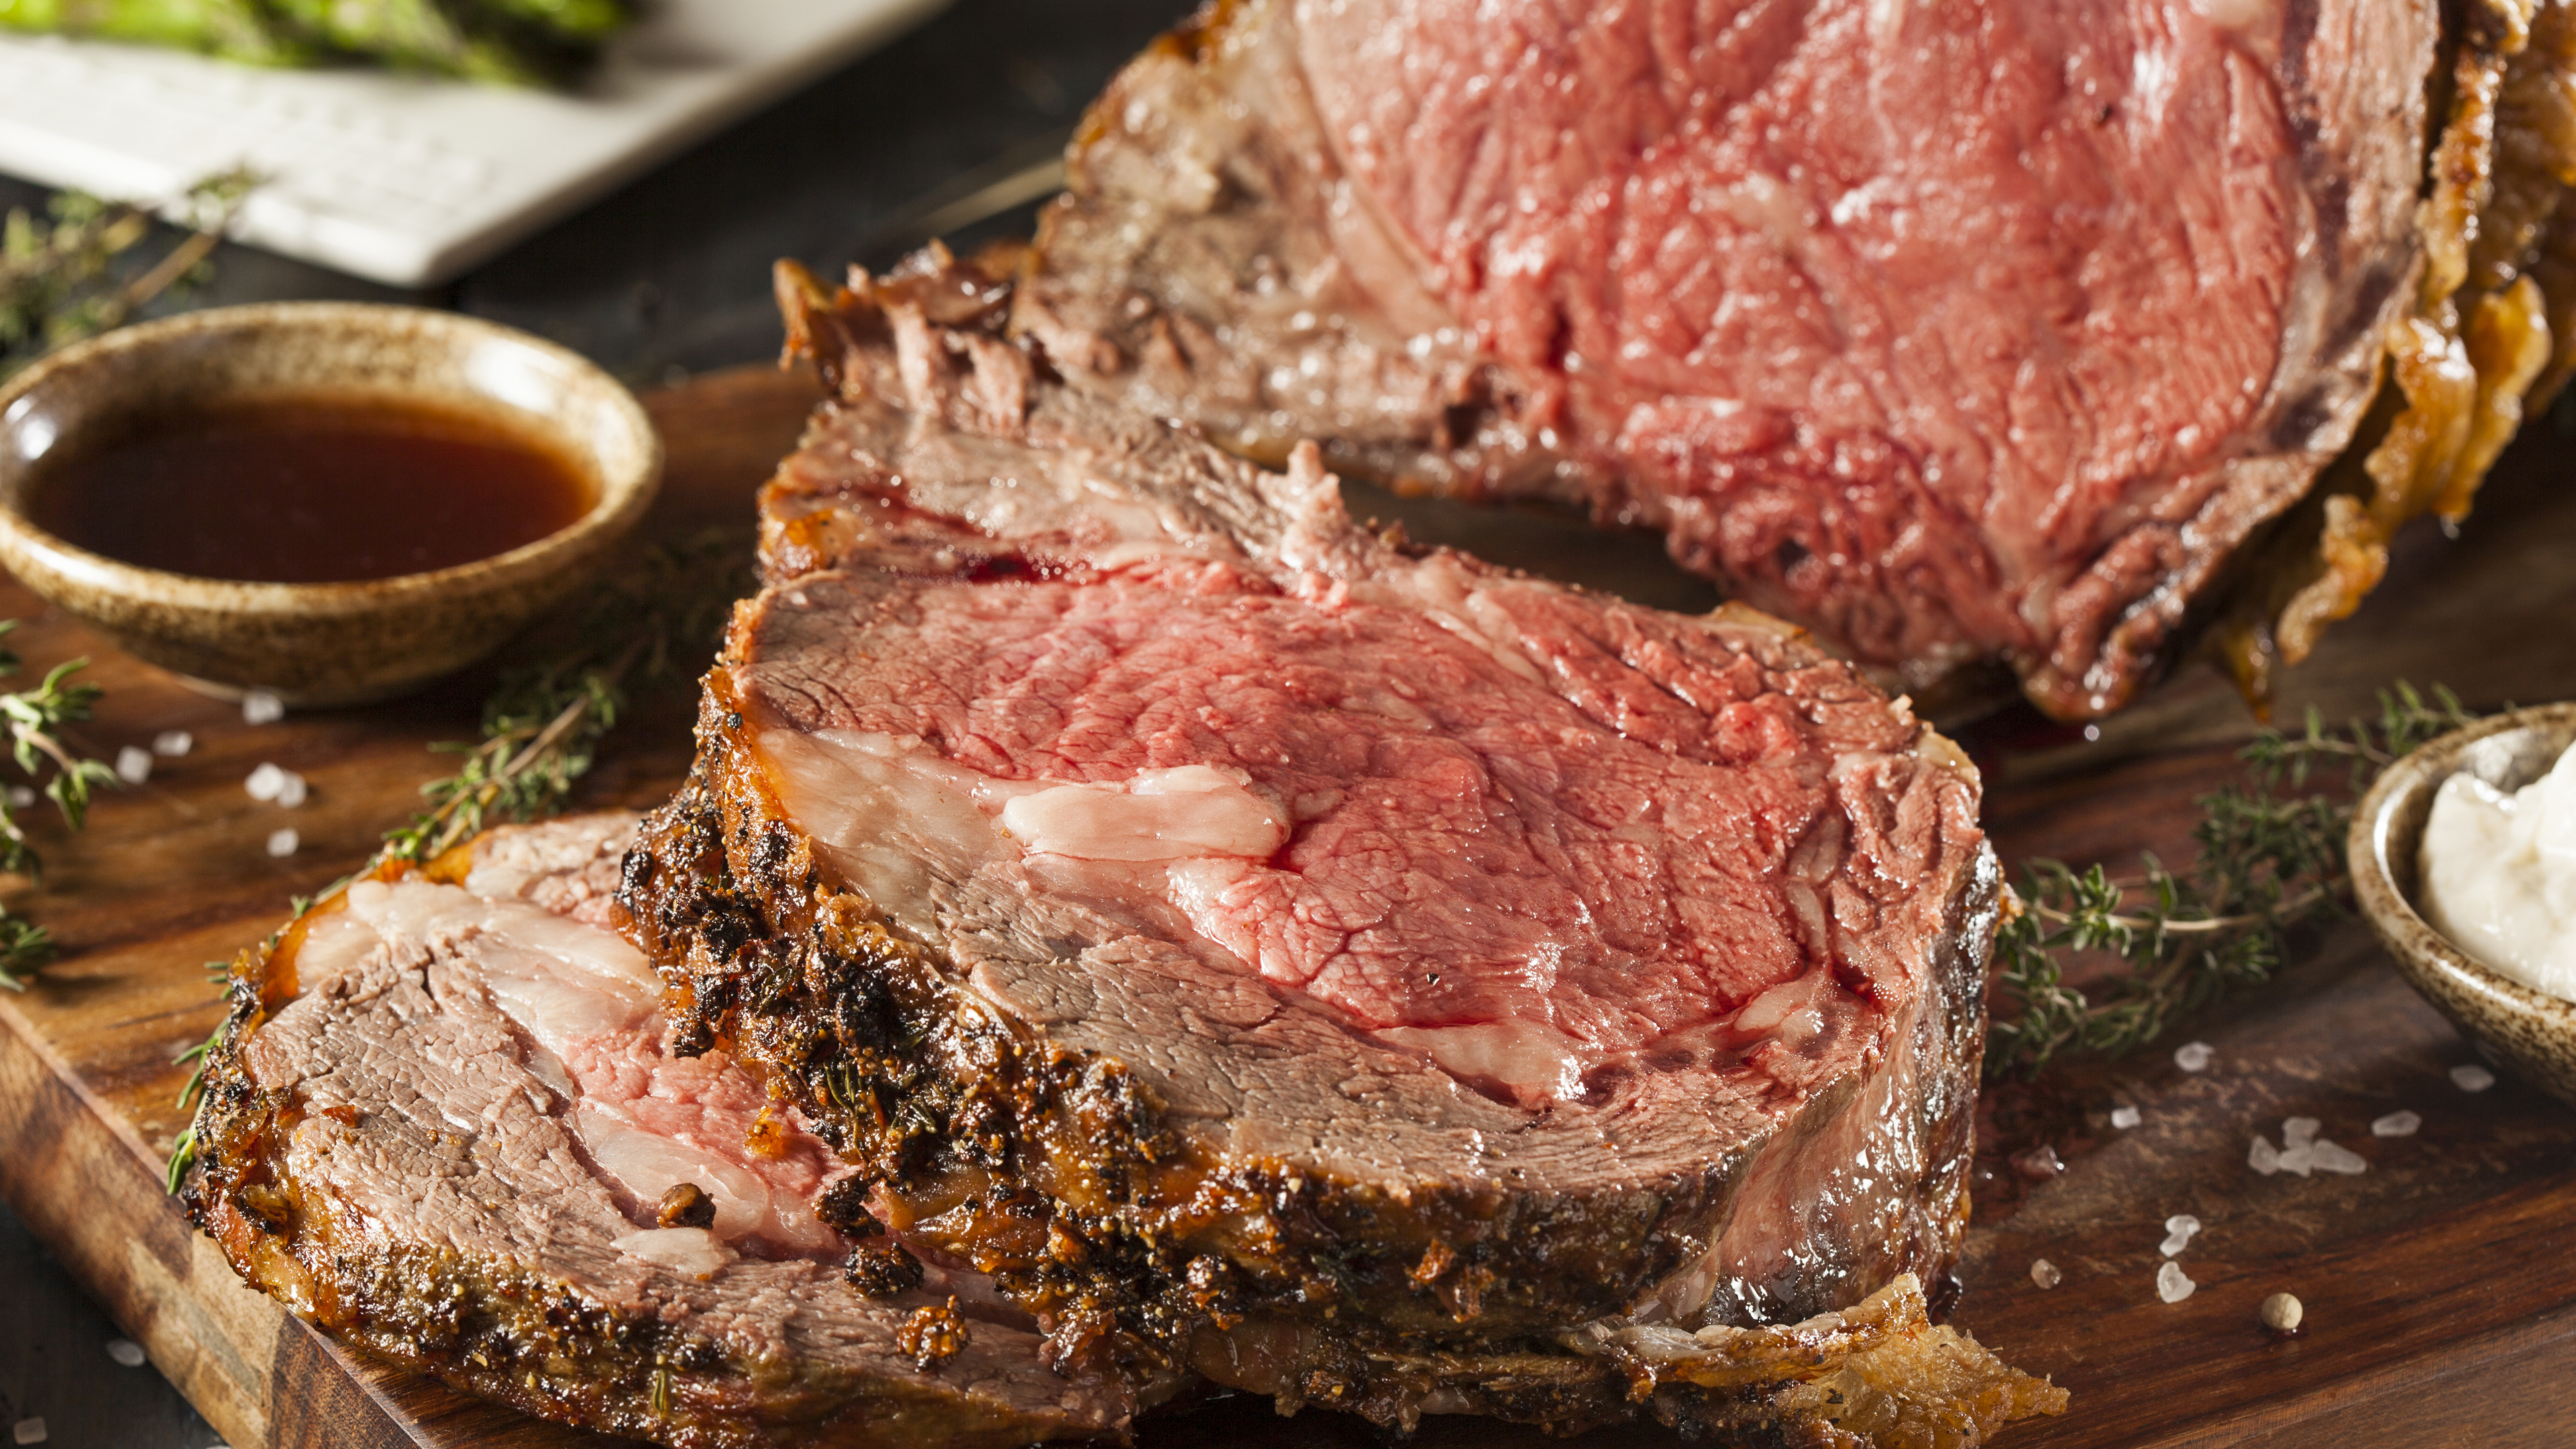 Charlie Palmer Steak Reno Brings Iconic The Beefsteak Event West